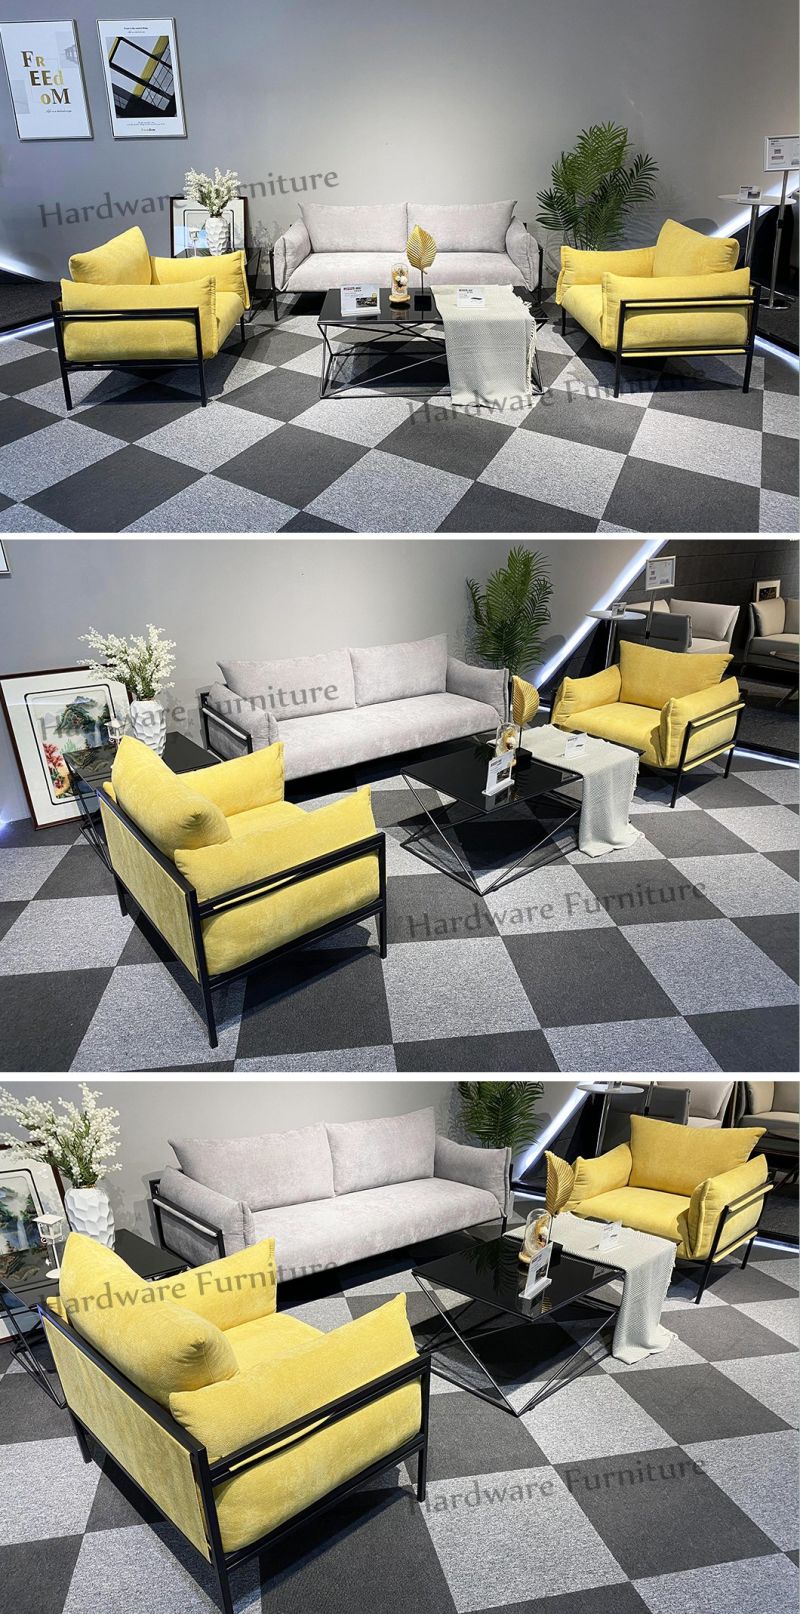 Hardware Living Room Furniture Hotel Style Sofa Lounge